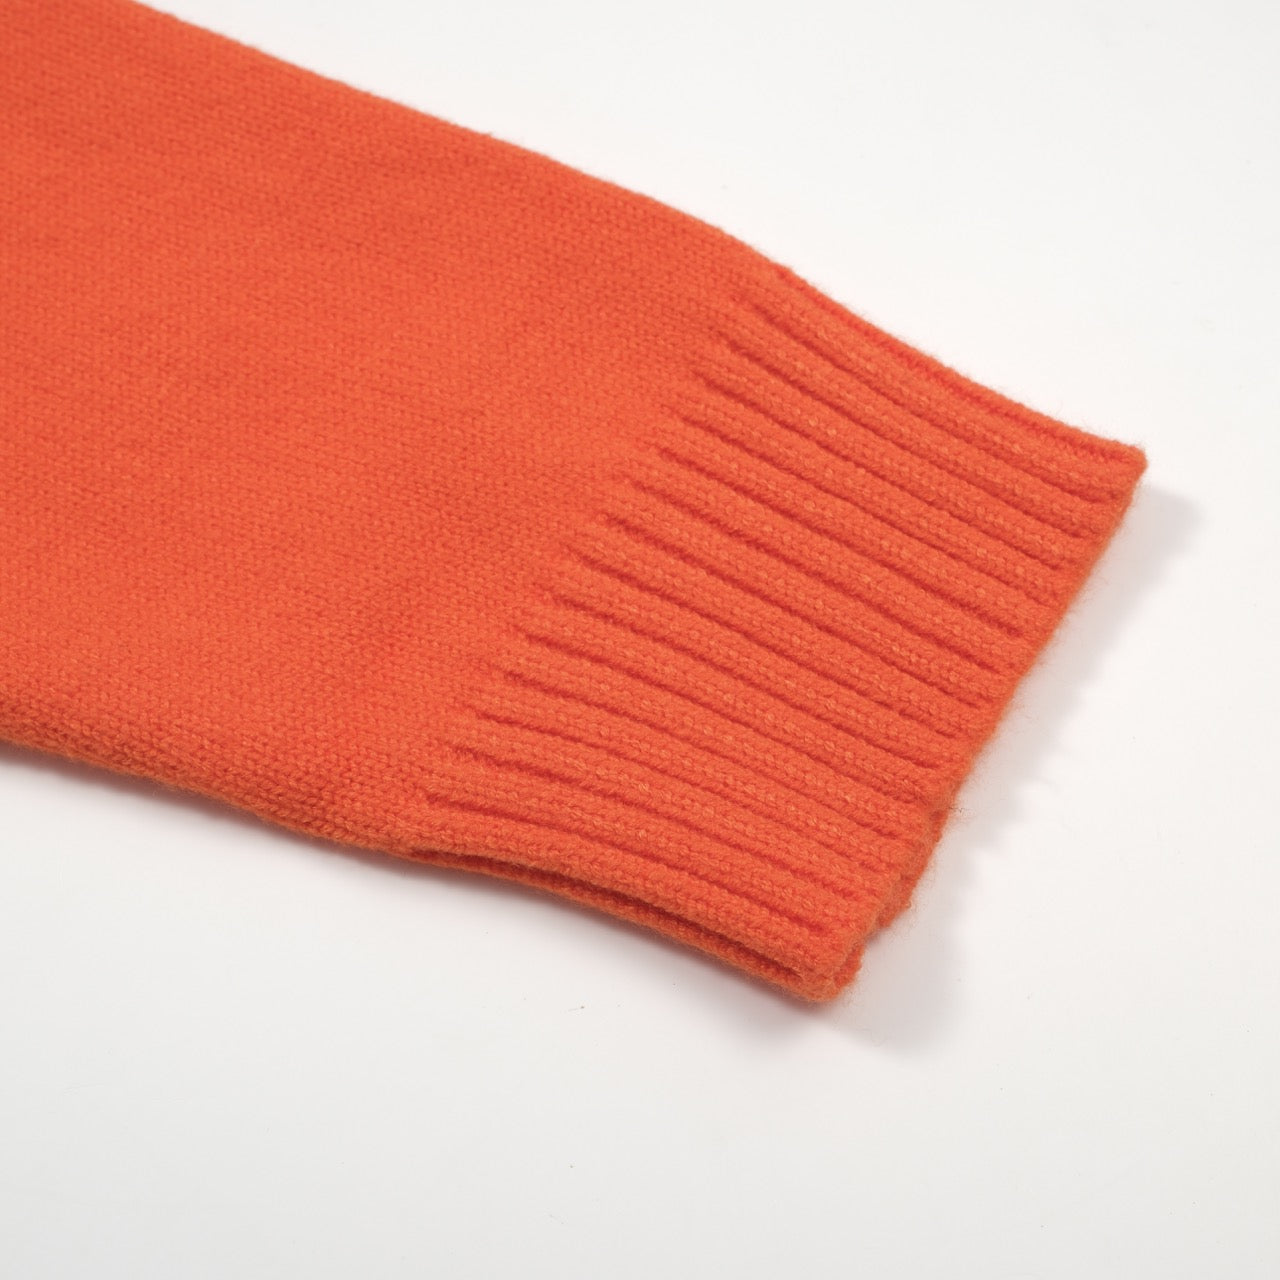 Men's Chest Lines Long Sleeve Orange Sweater